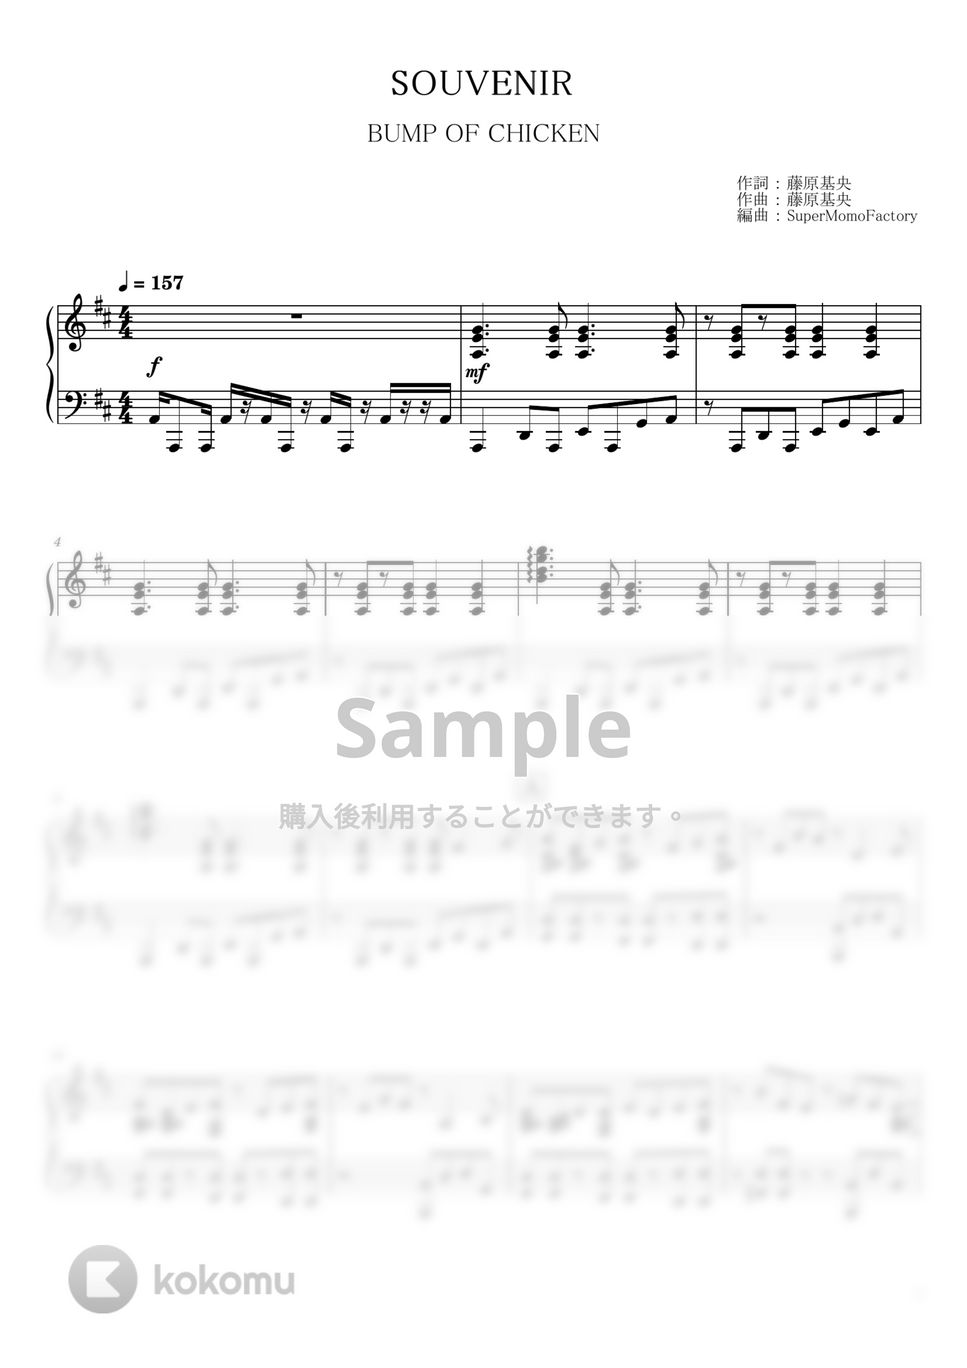 BUMP OF CHICKEN - SOUVENIR (ピアノソロ /  上級) by SuperMomoFactory